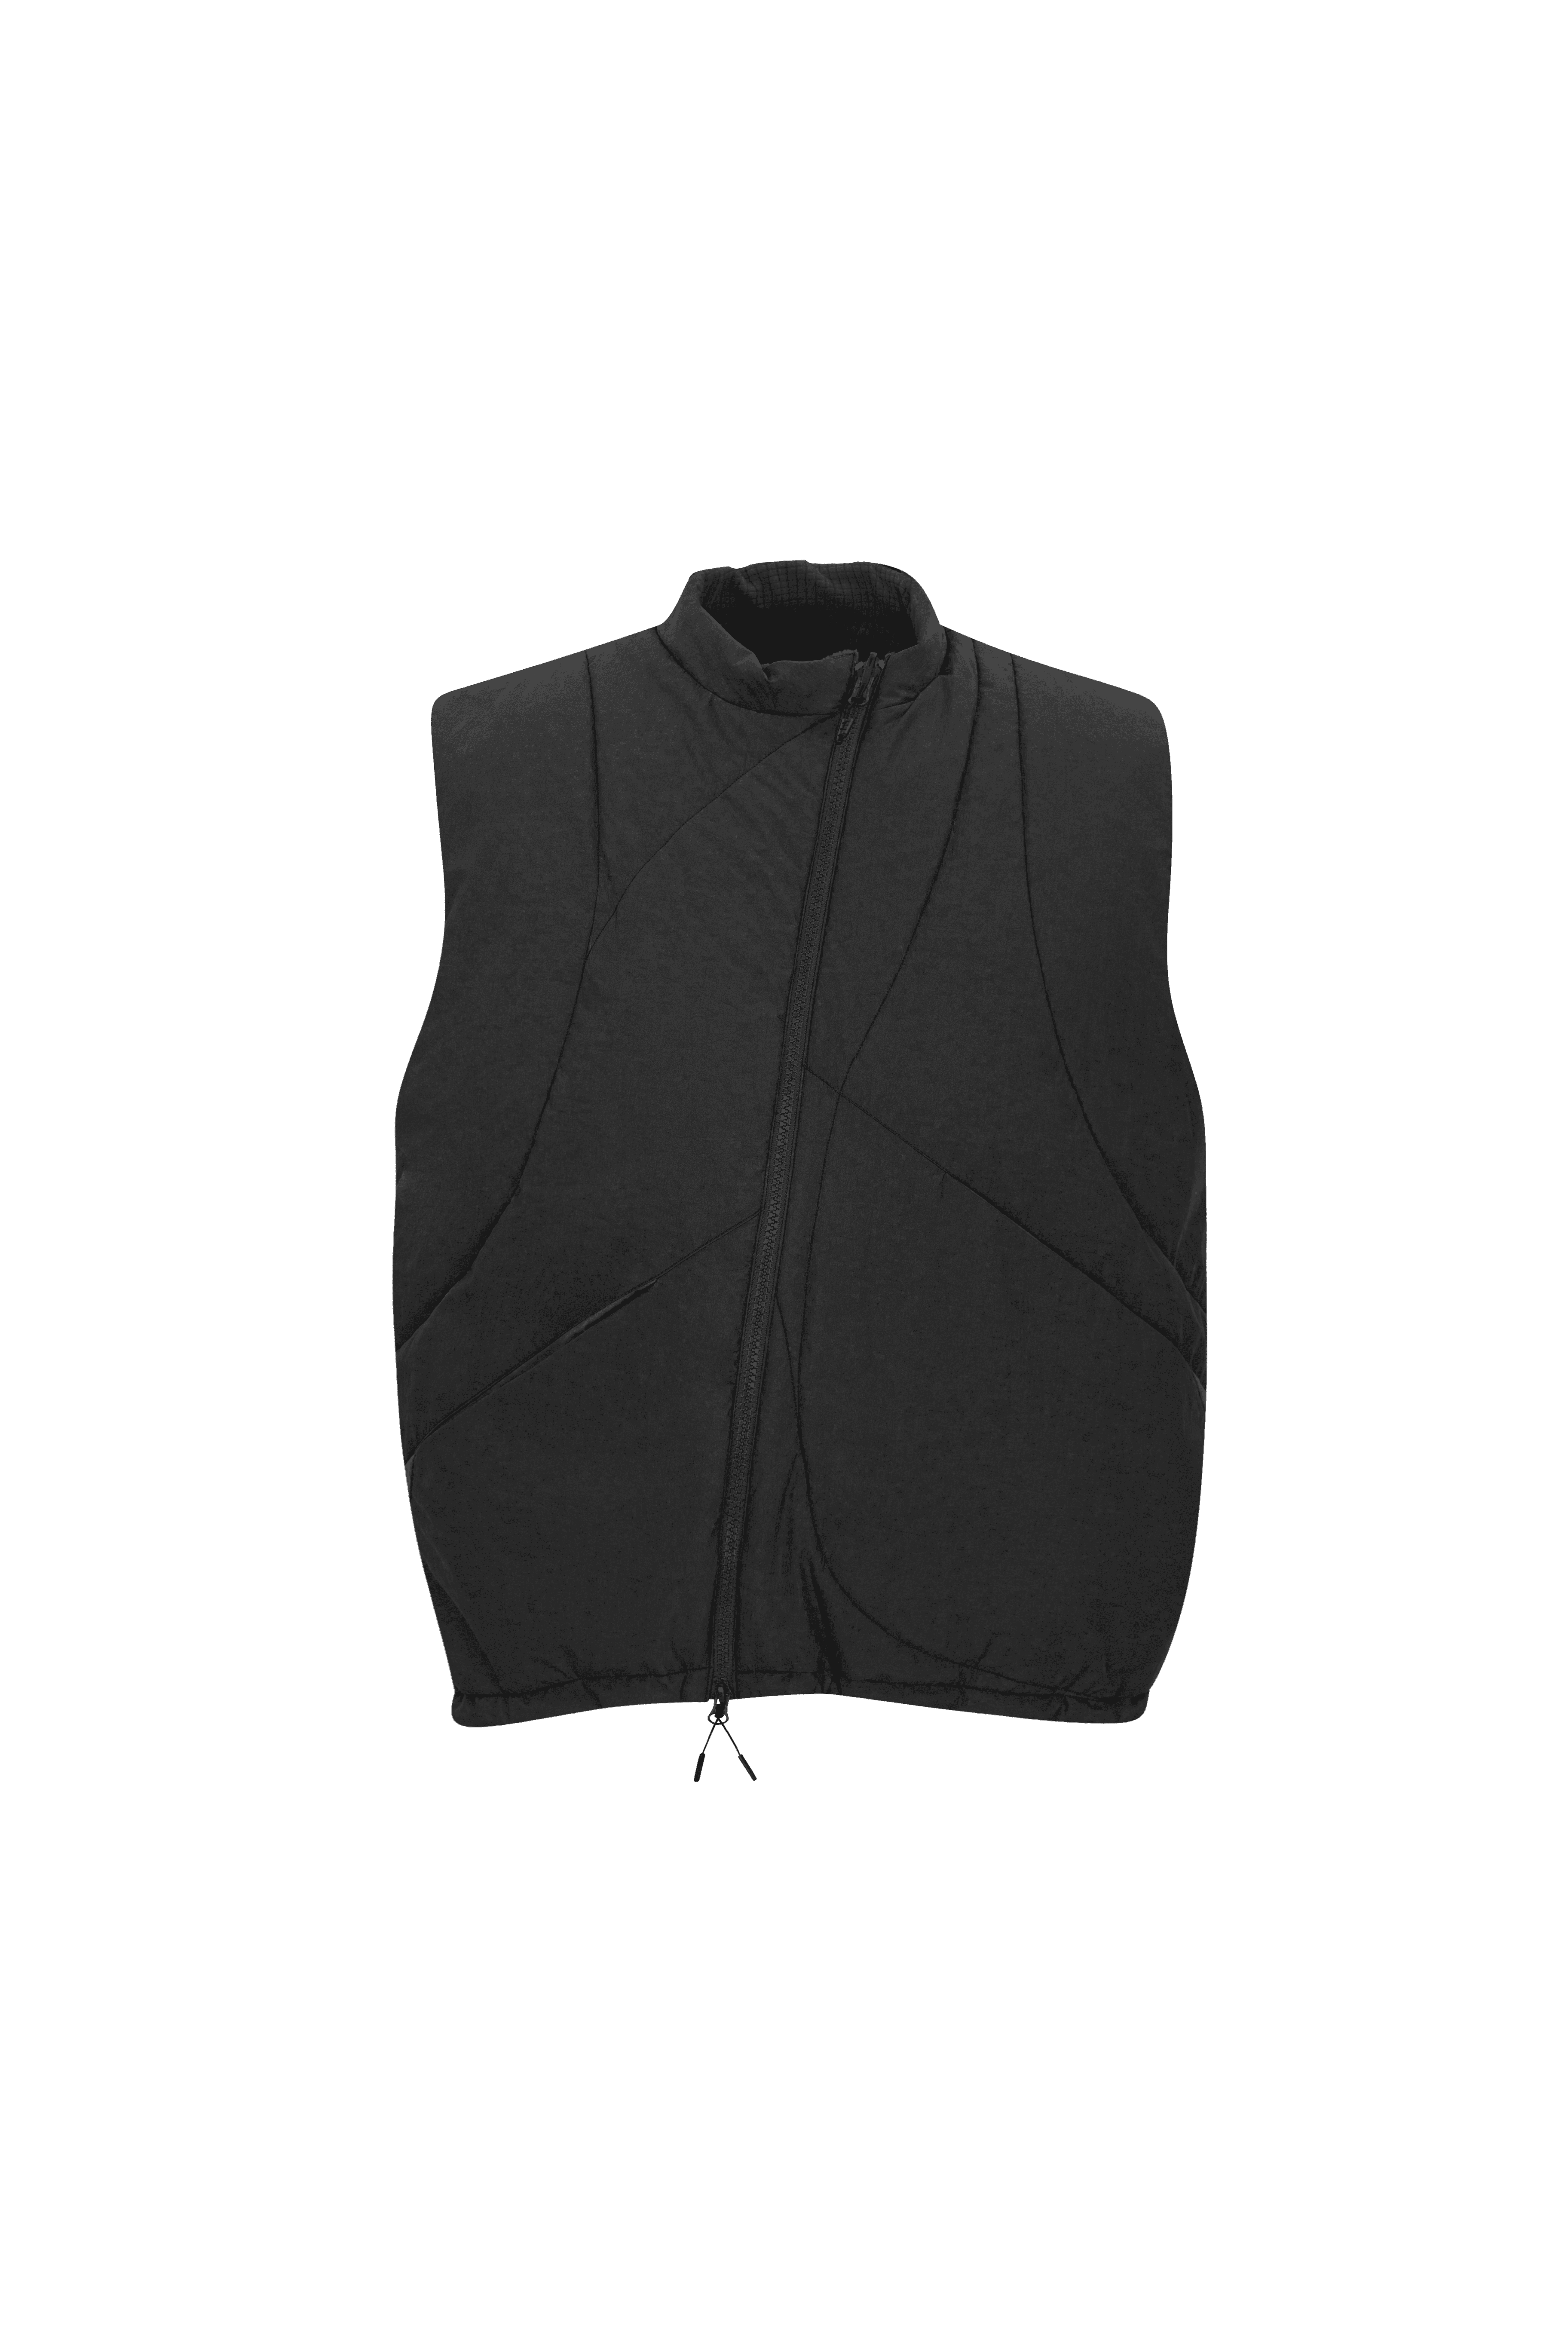 3M Thinsulate Vest Black